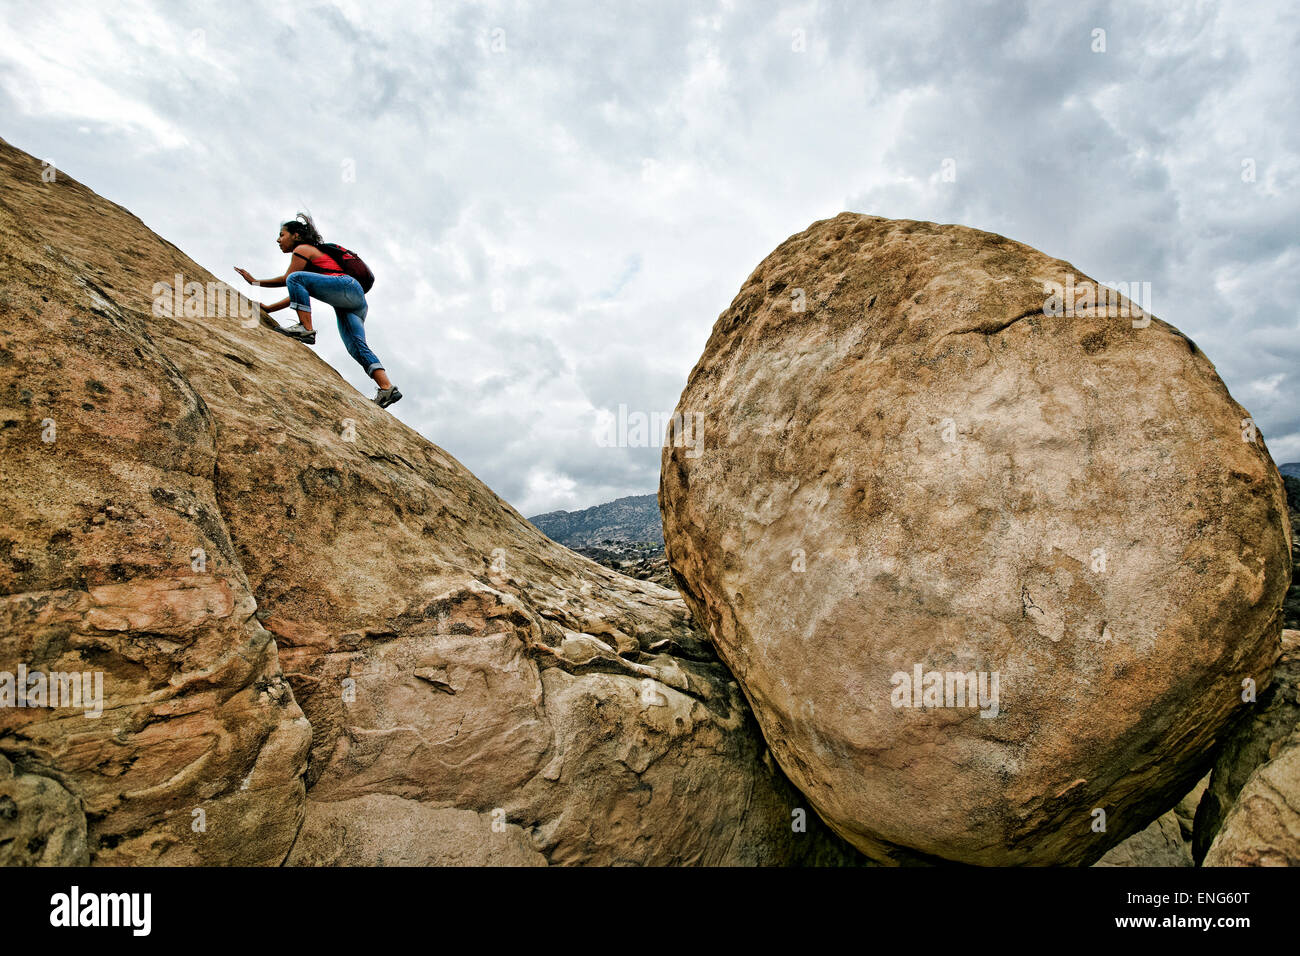 Hispanic woman climbing rocky hillside Stock Photo